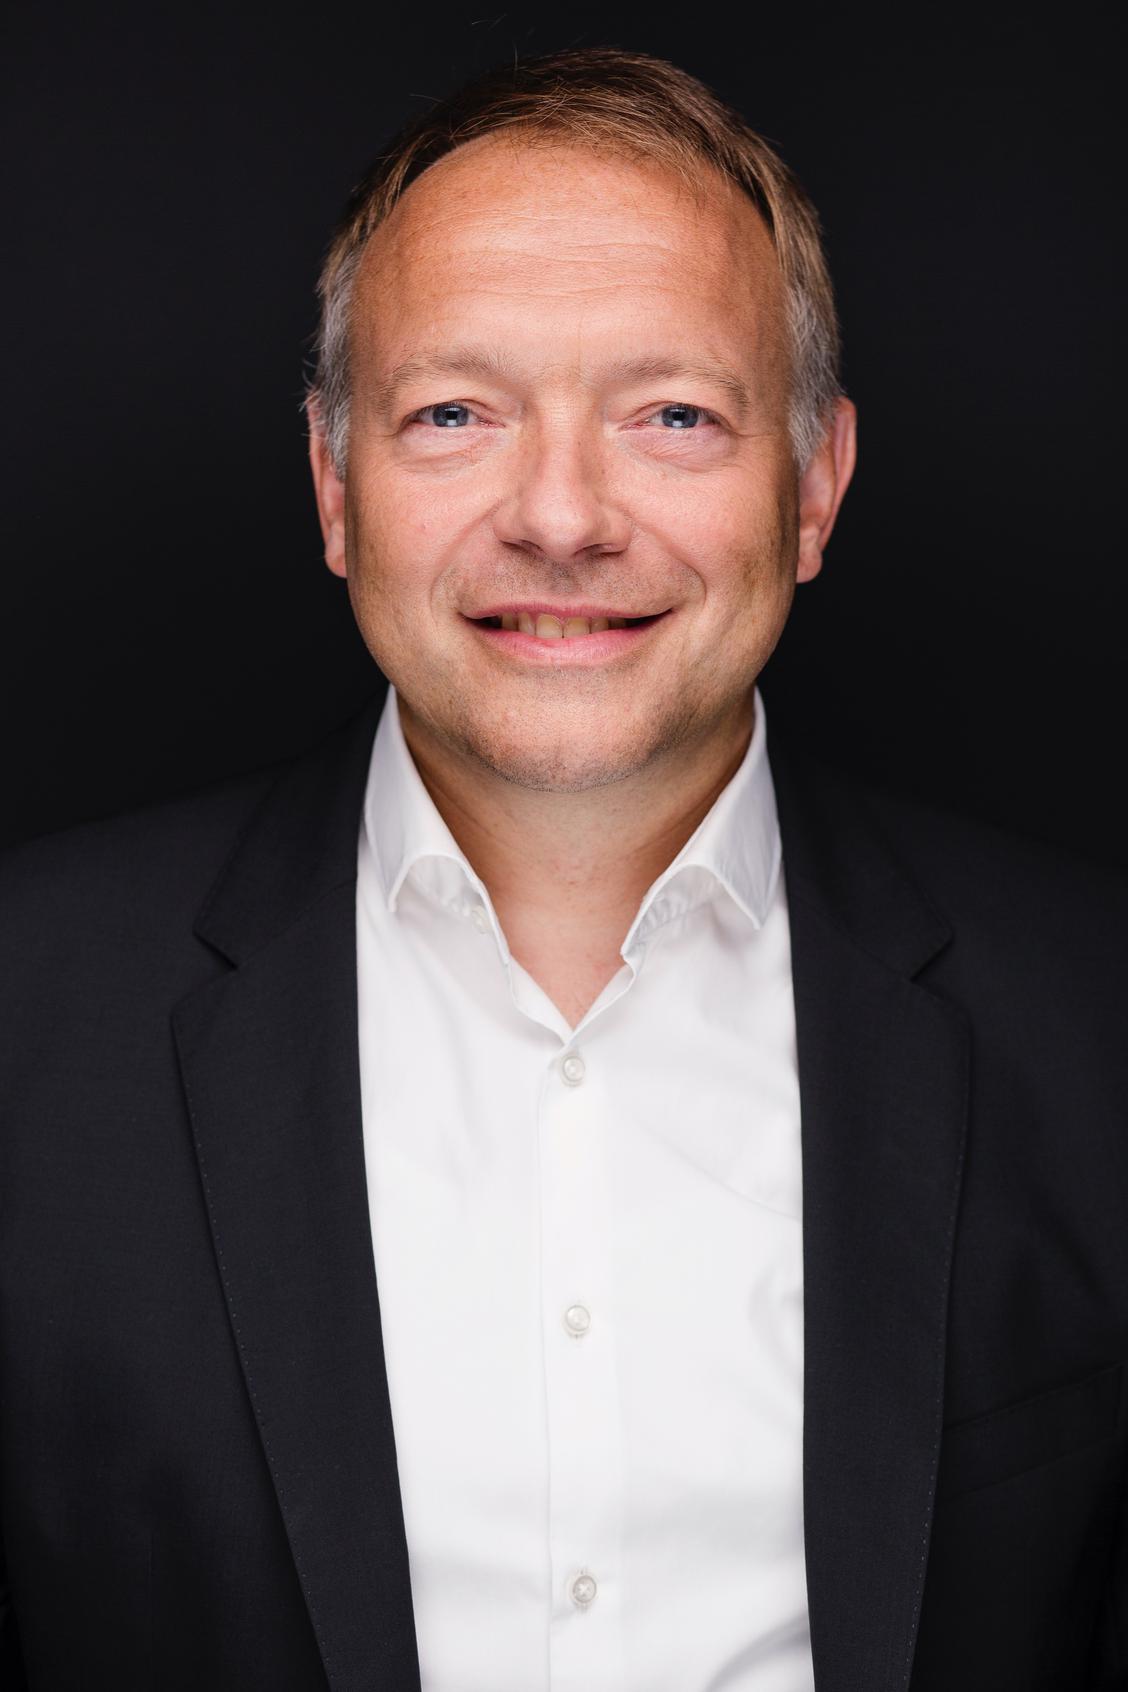 Dr. Ralf Niemann, CEO Digitas Pixelpark (Bild: Digitas Pixelpark)